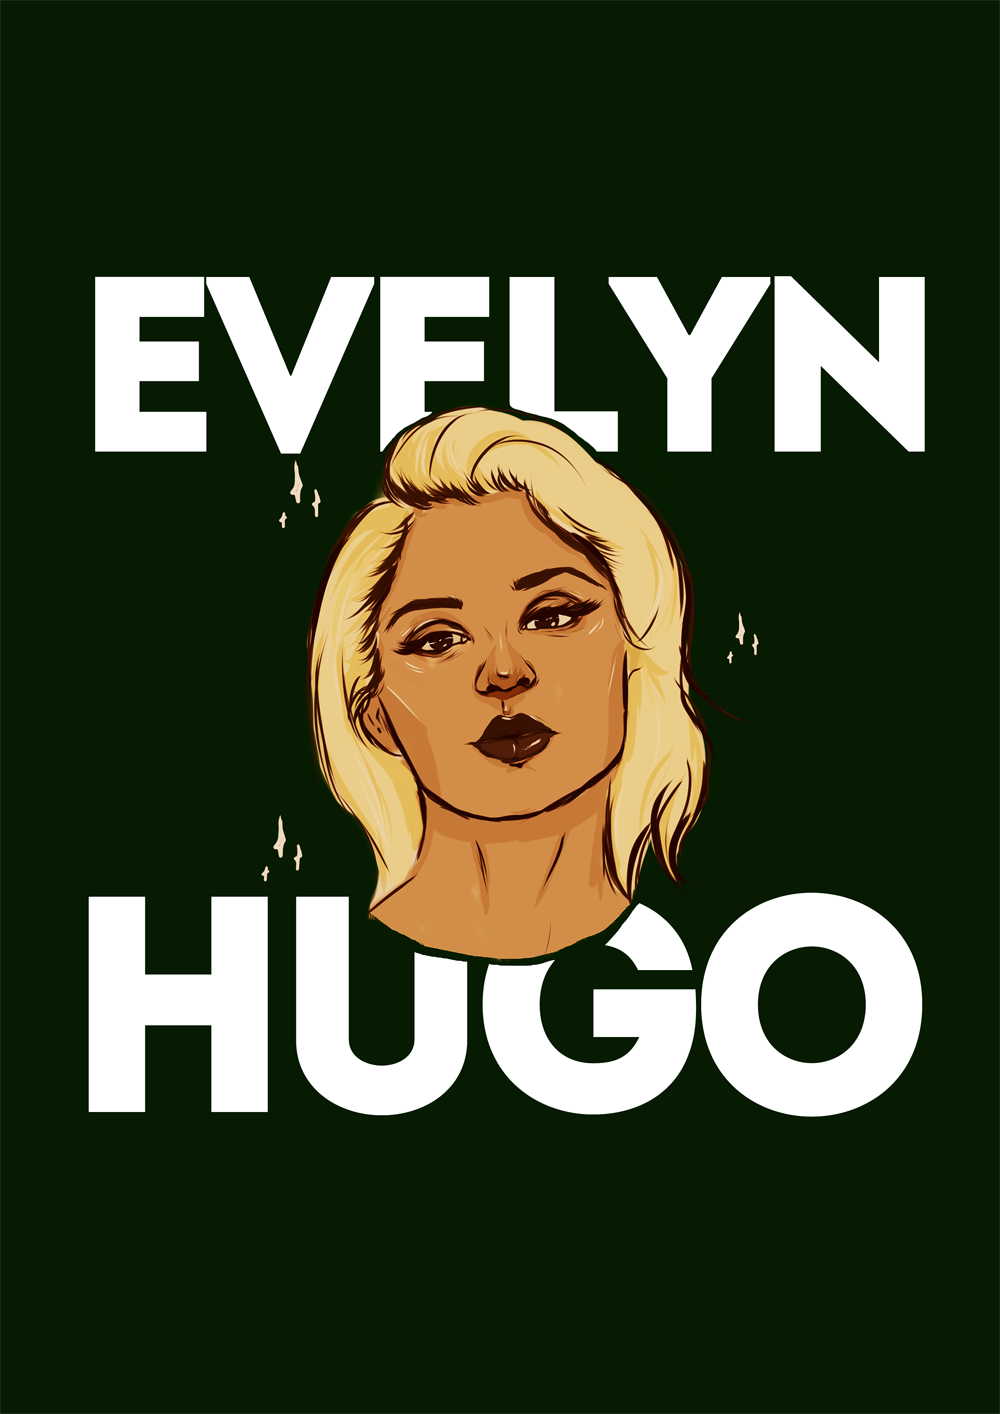 Evelyn Hugo Costume